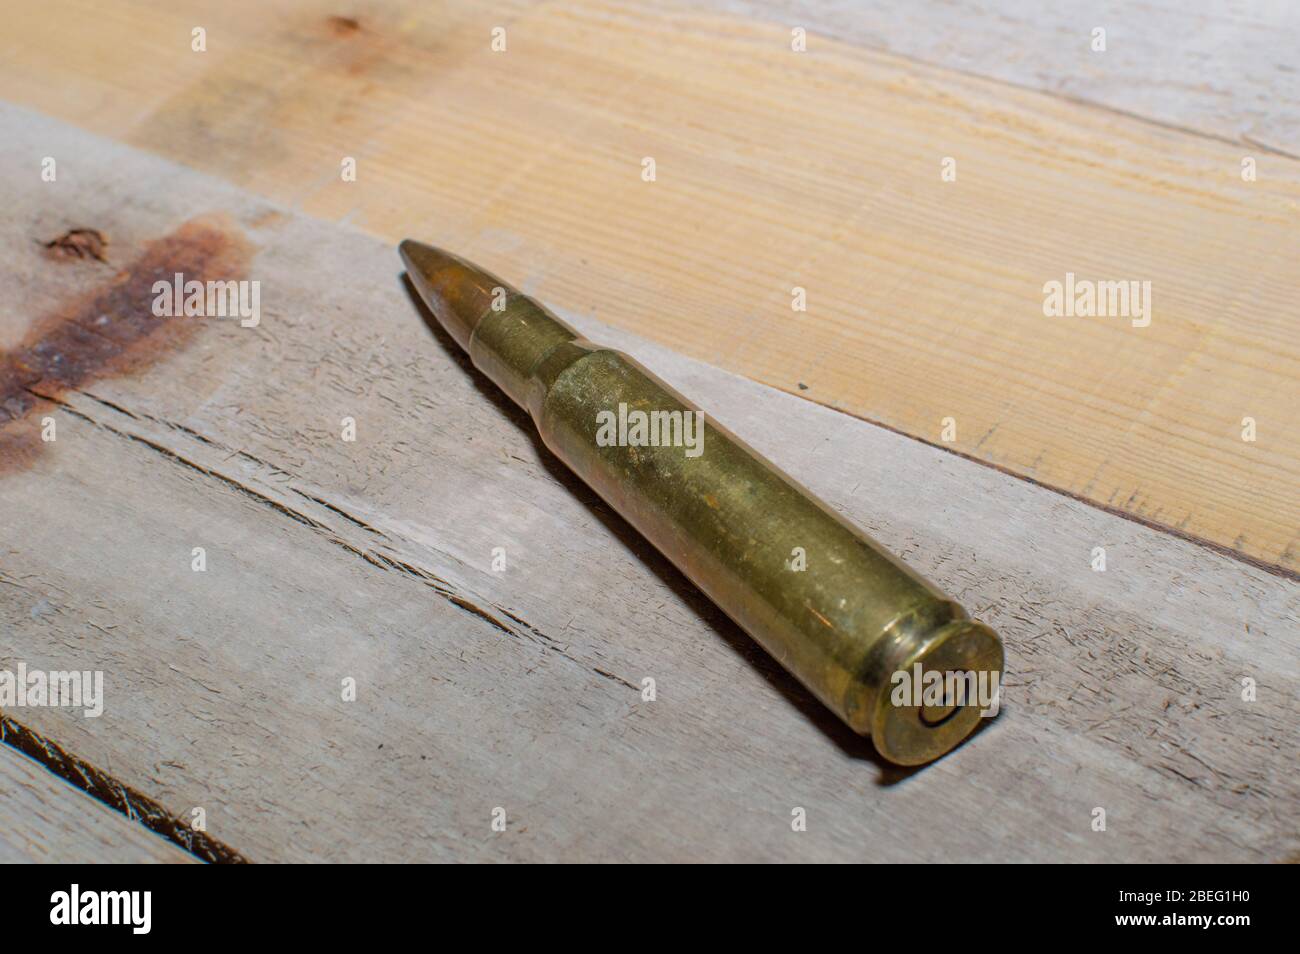 Una Bala De Rifle Calibre 50 Sobre Madera De Granero Fotografia De Stock Alamy